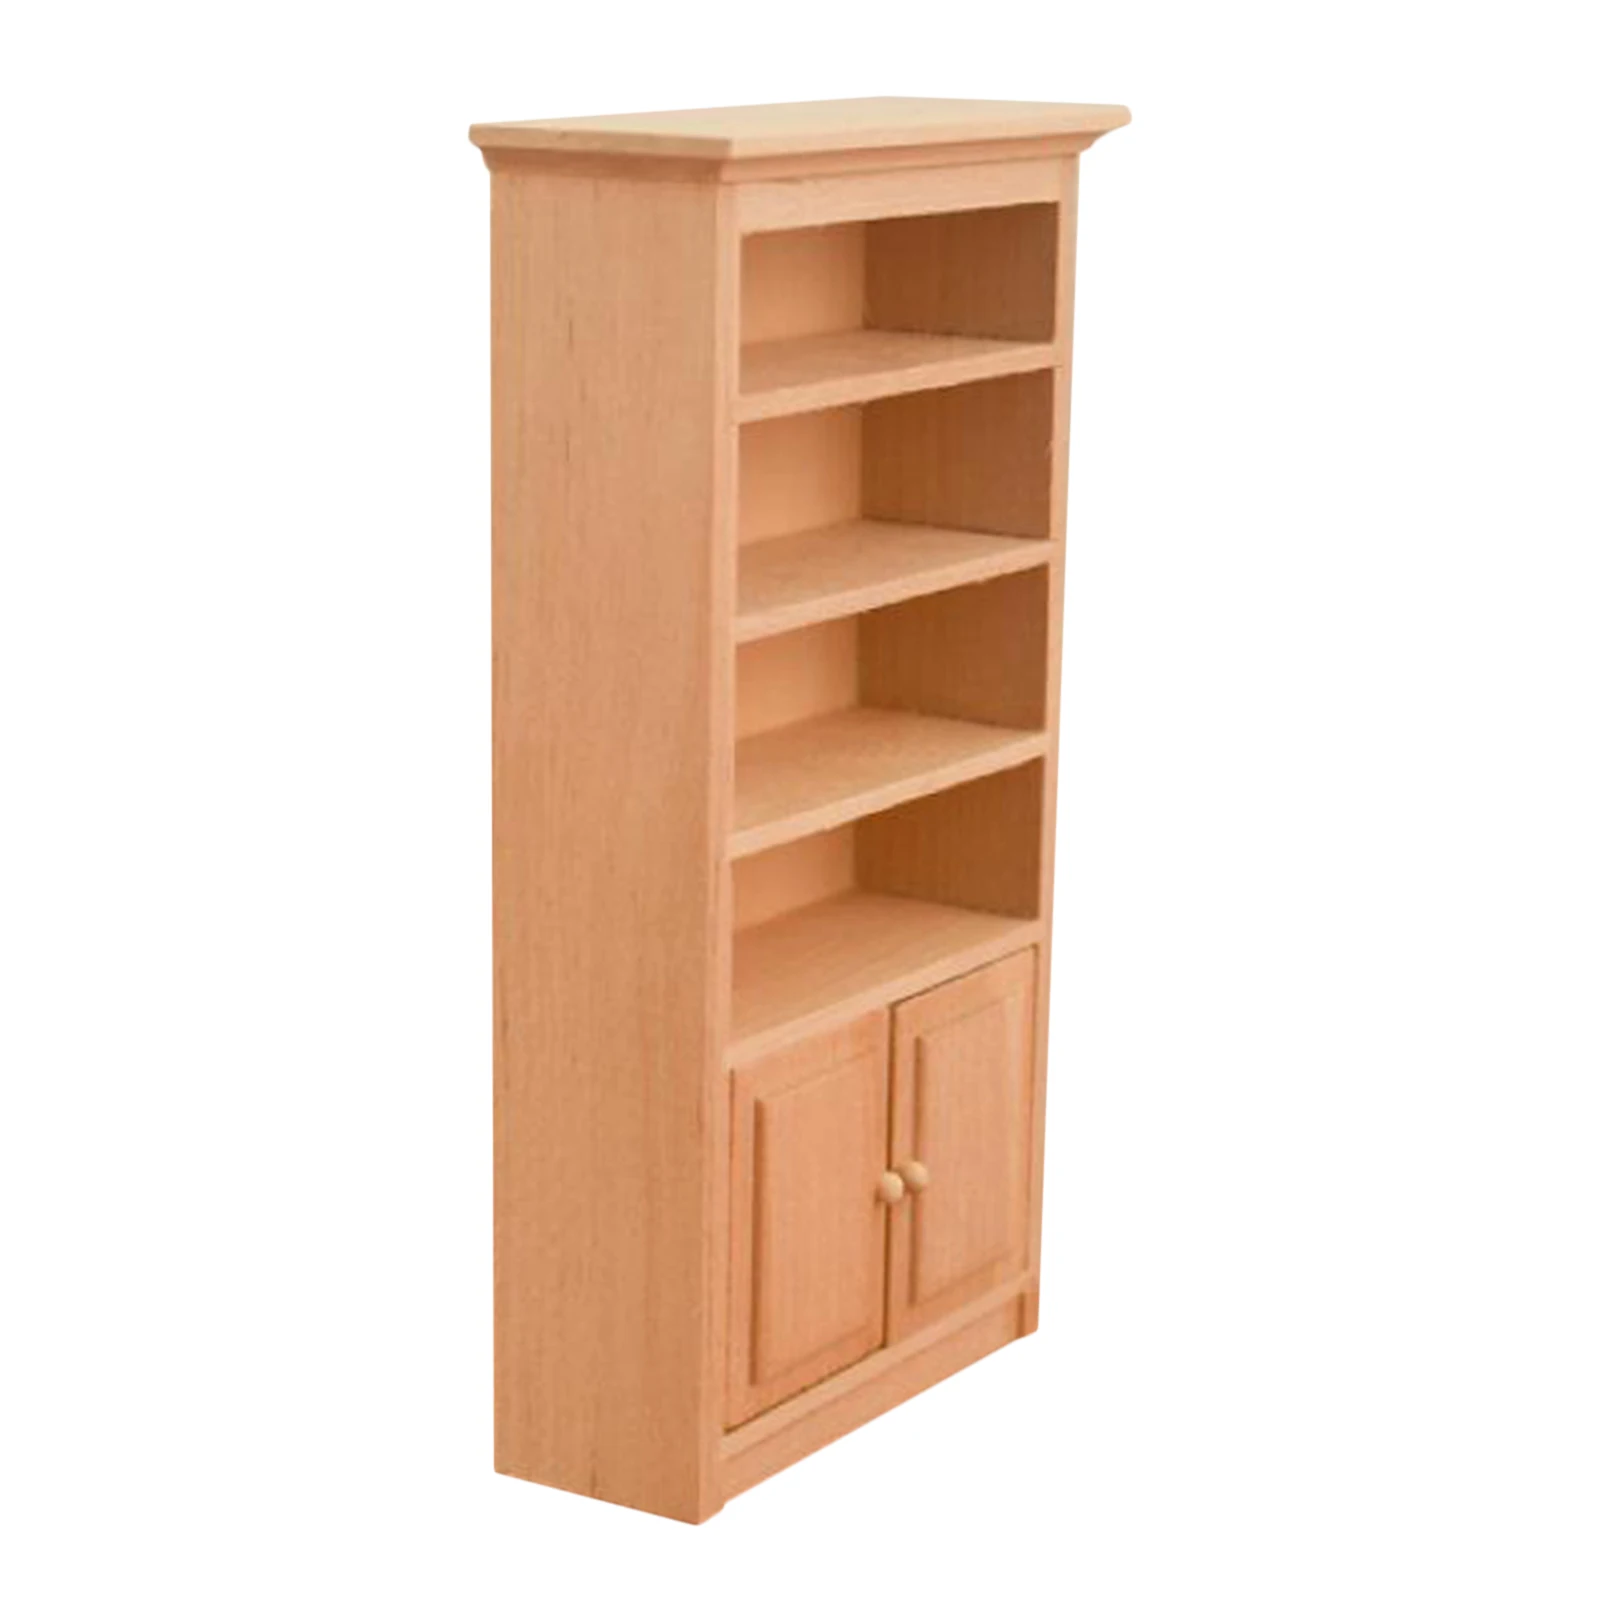 1/12 Dollhouse Wood Cabinet Bookshelf Model Living Room Supplies Scenery Decor